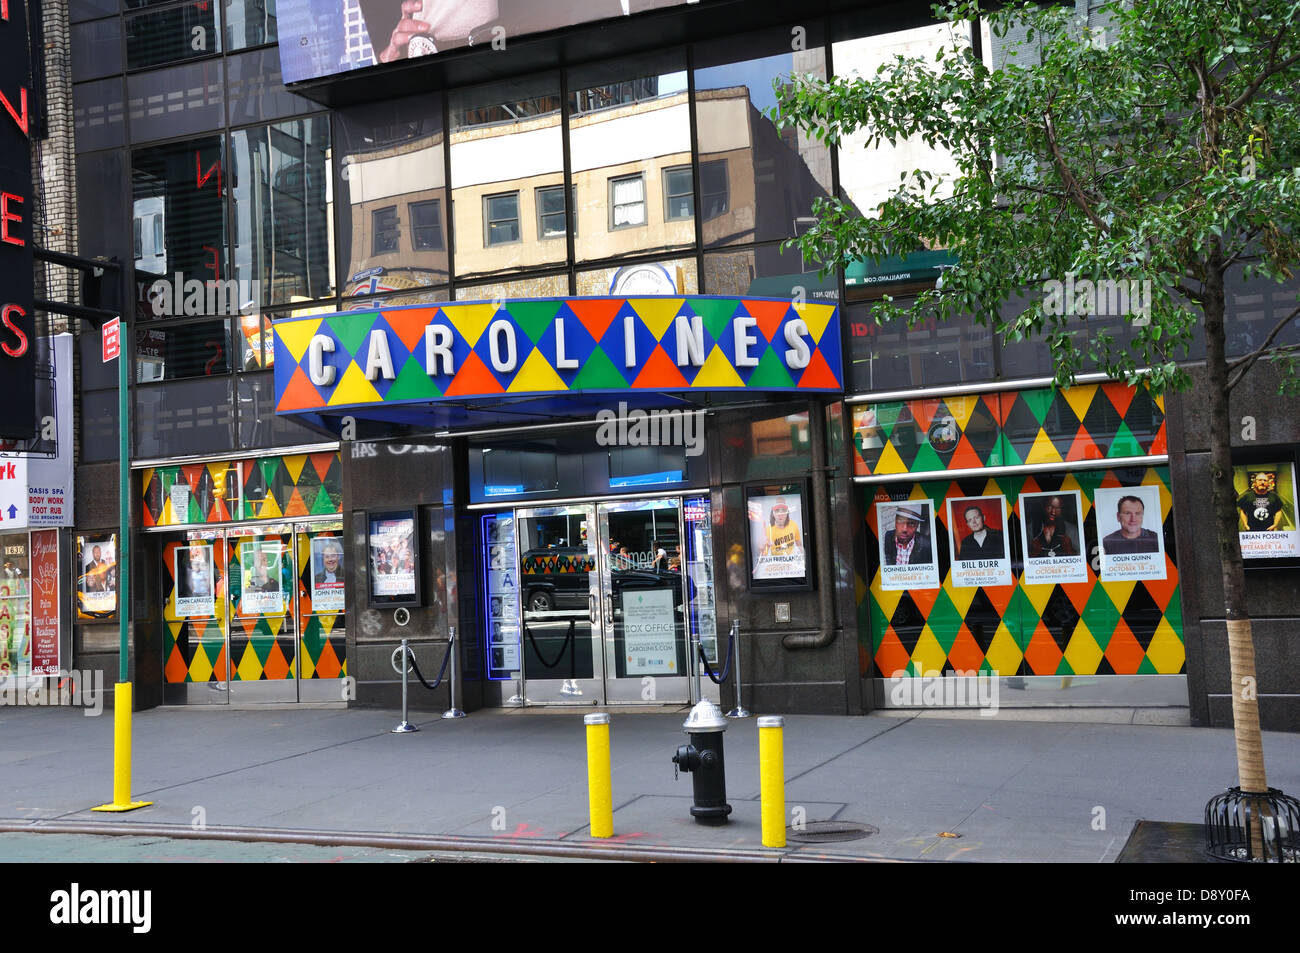 Carolines comedy theater, New York City, USA Stock Photo